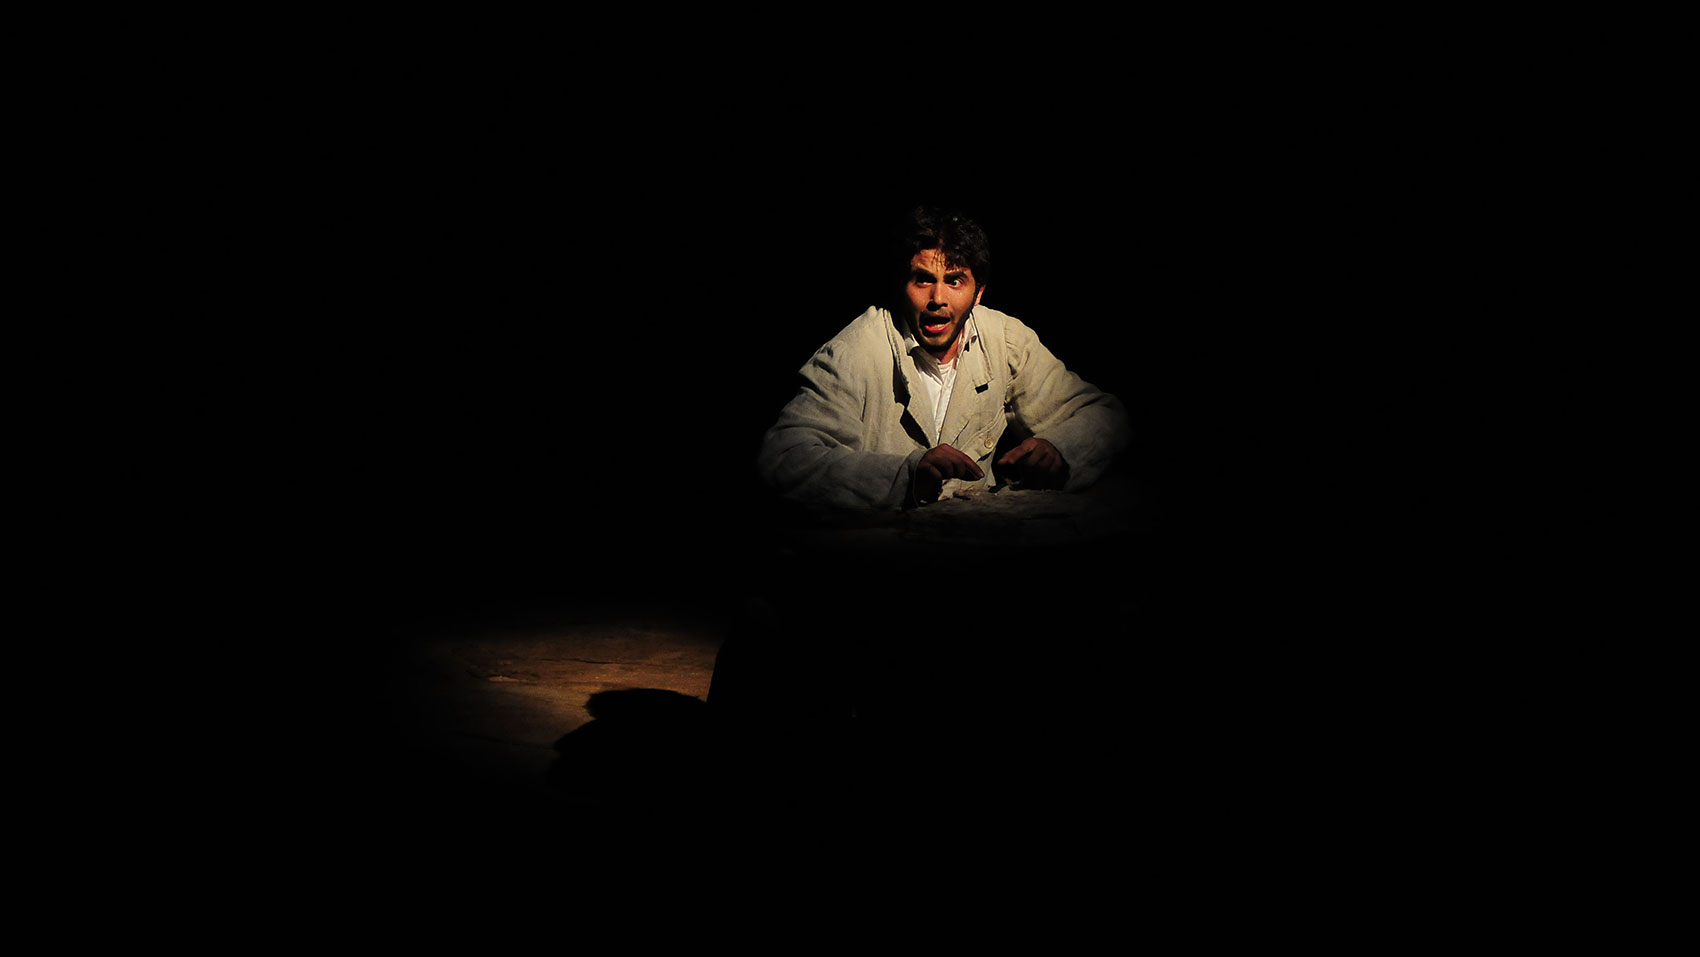 A man sitting down in the spotlight, speaking